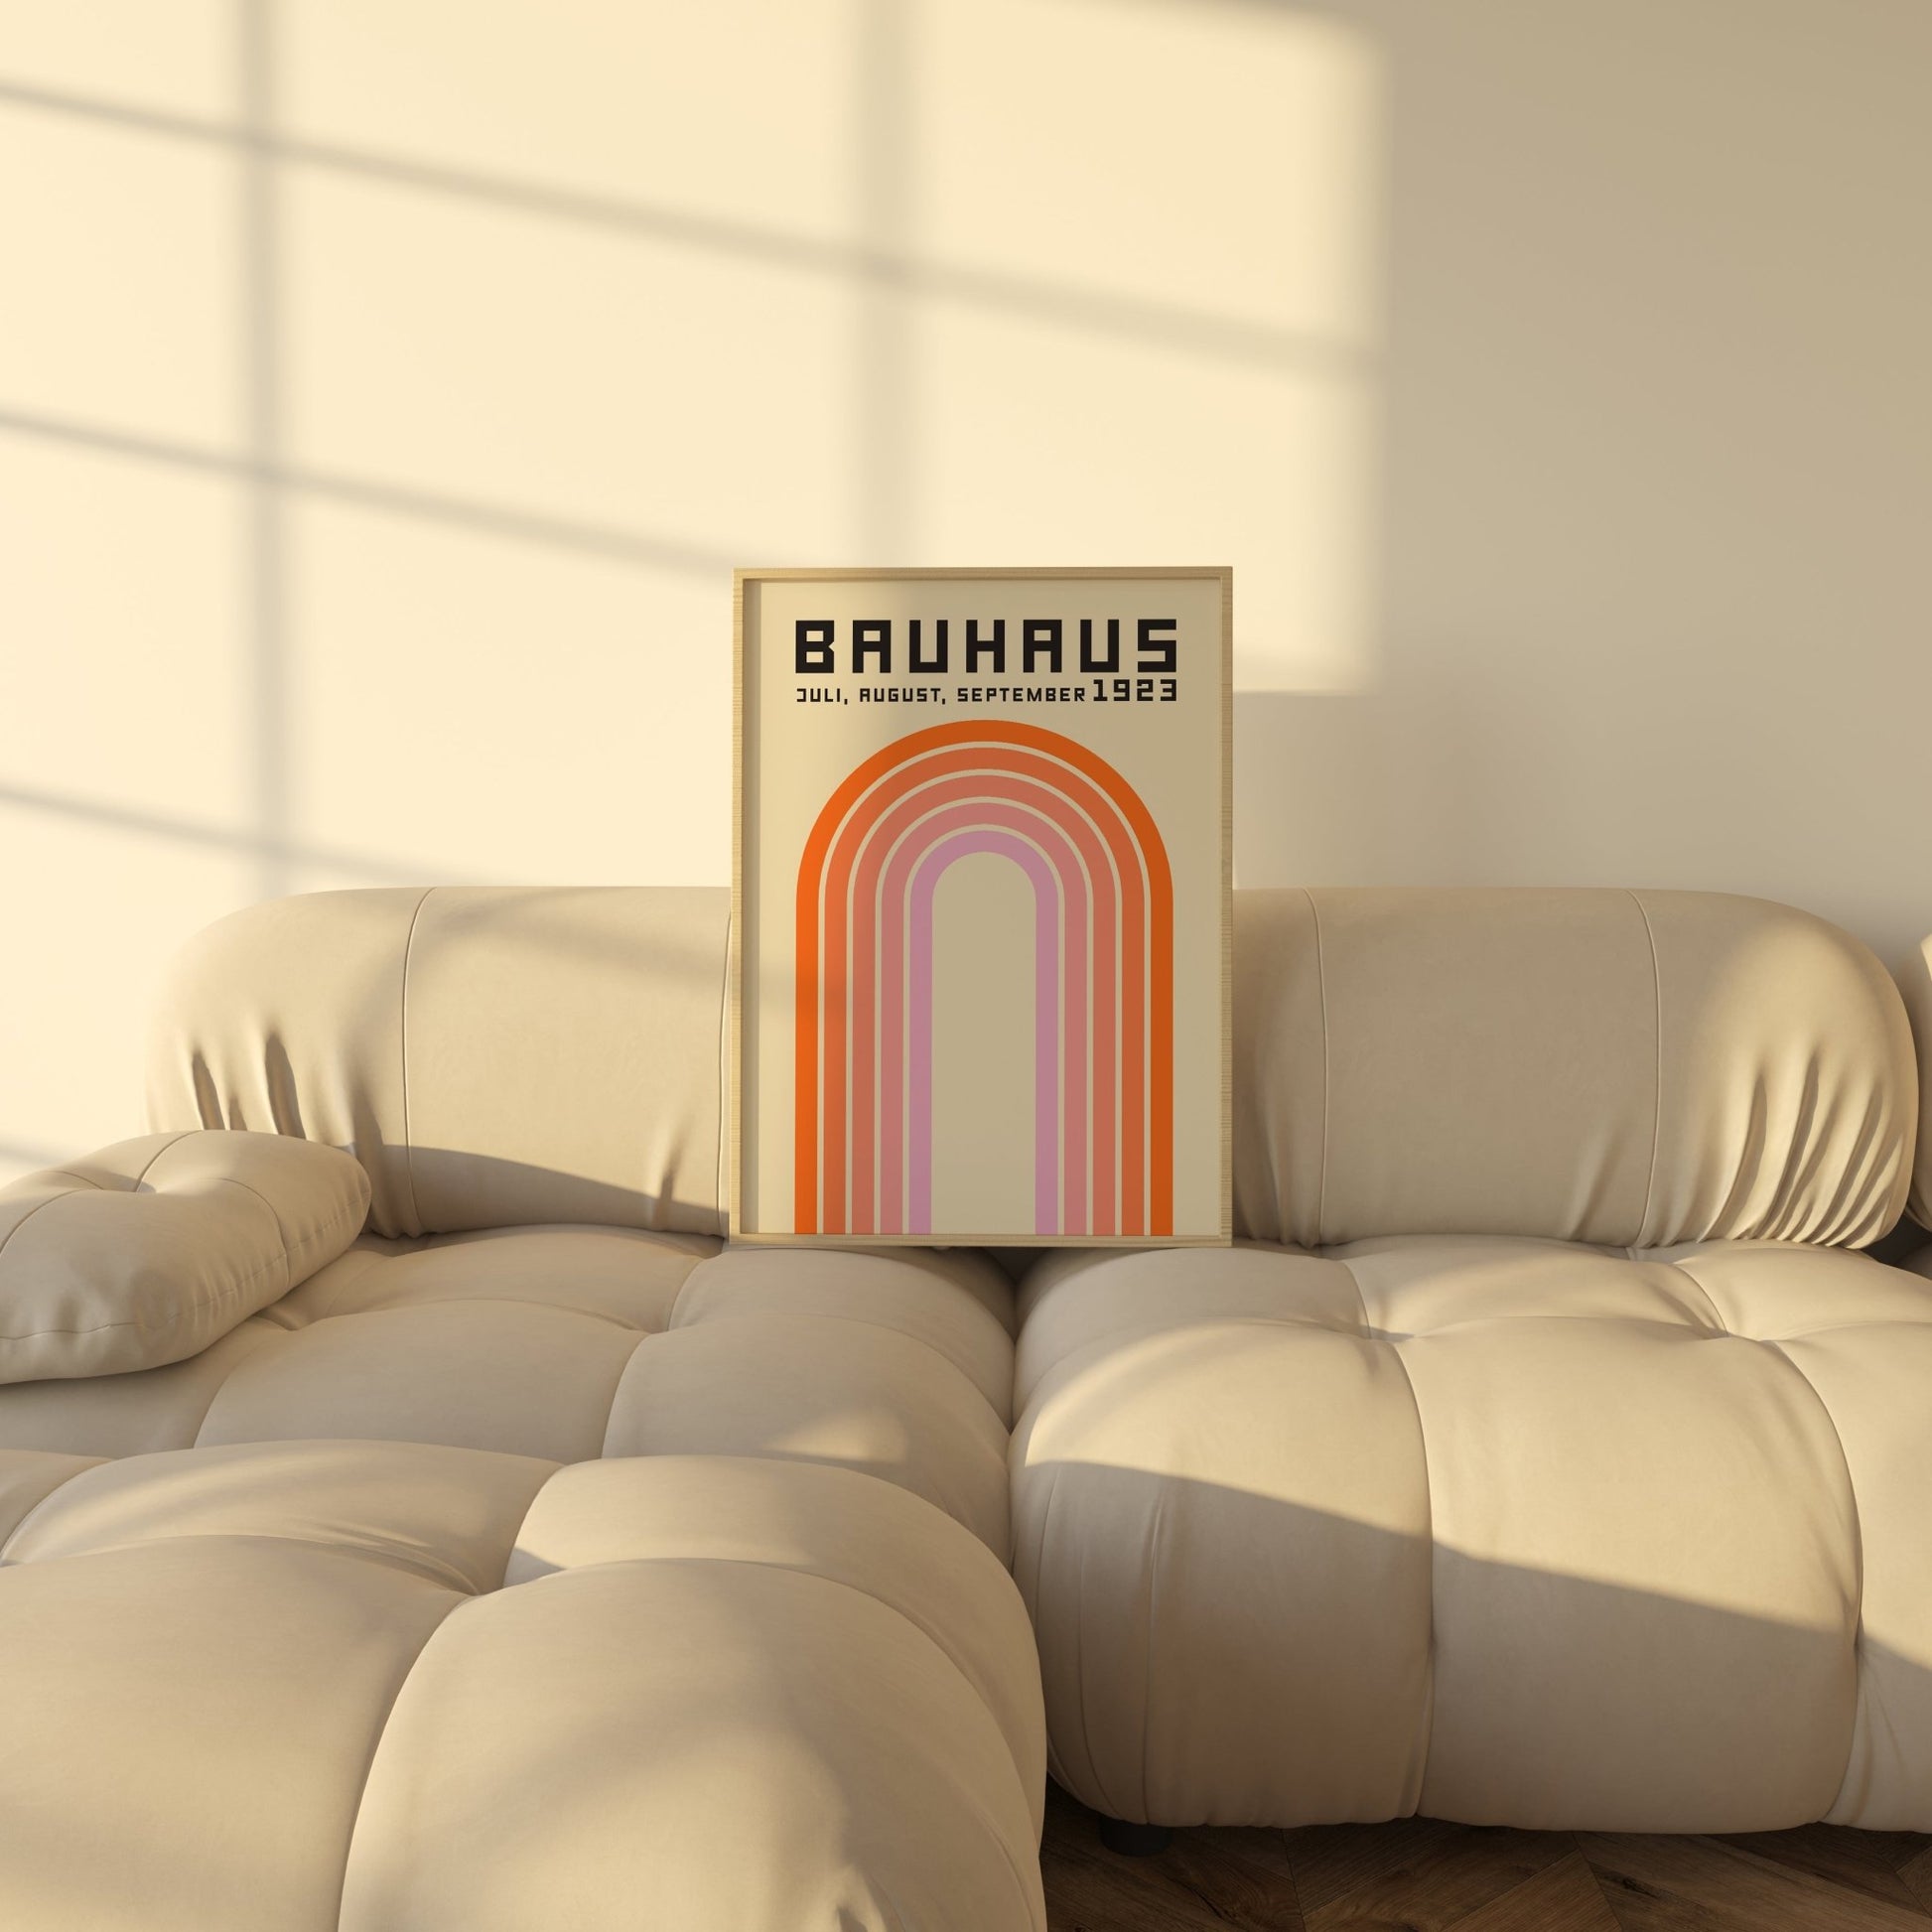 Bauhaus Art Print No. 34 - POSTERAMI